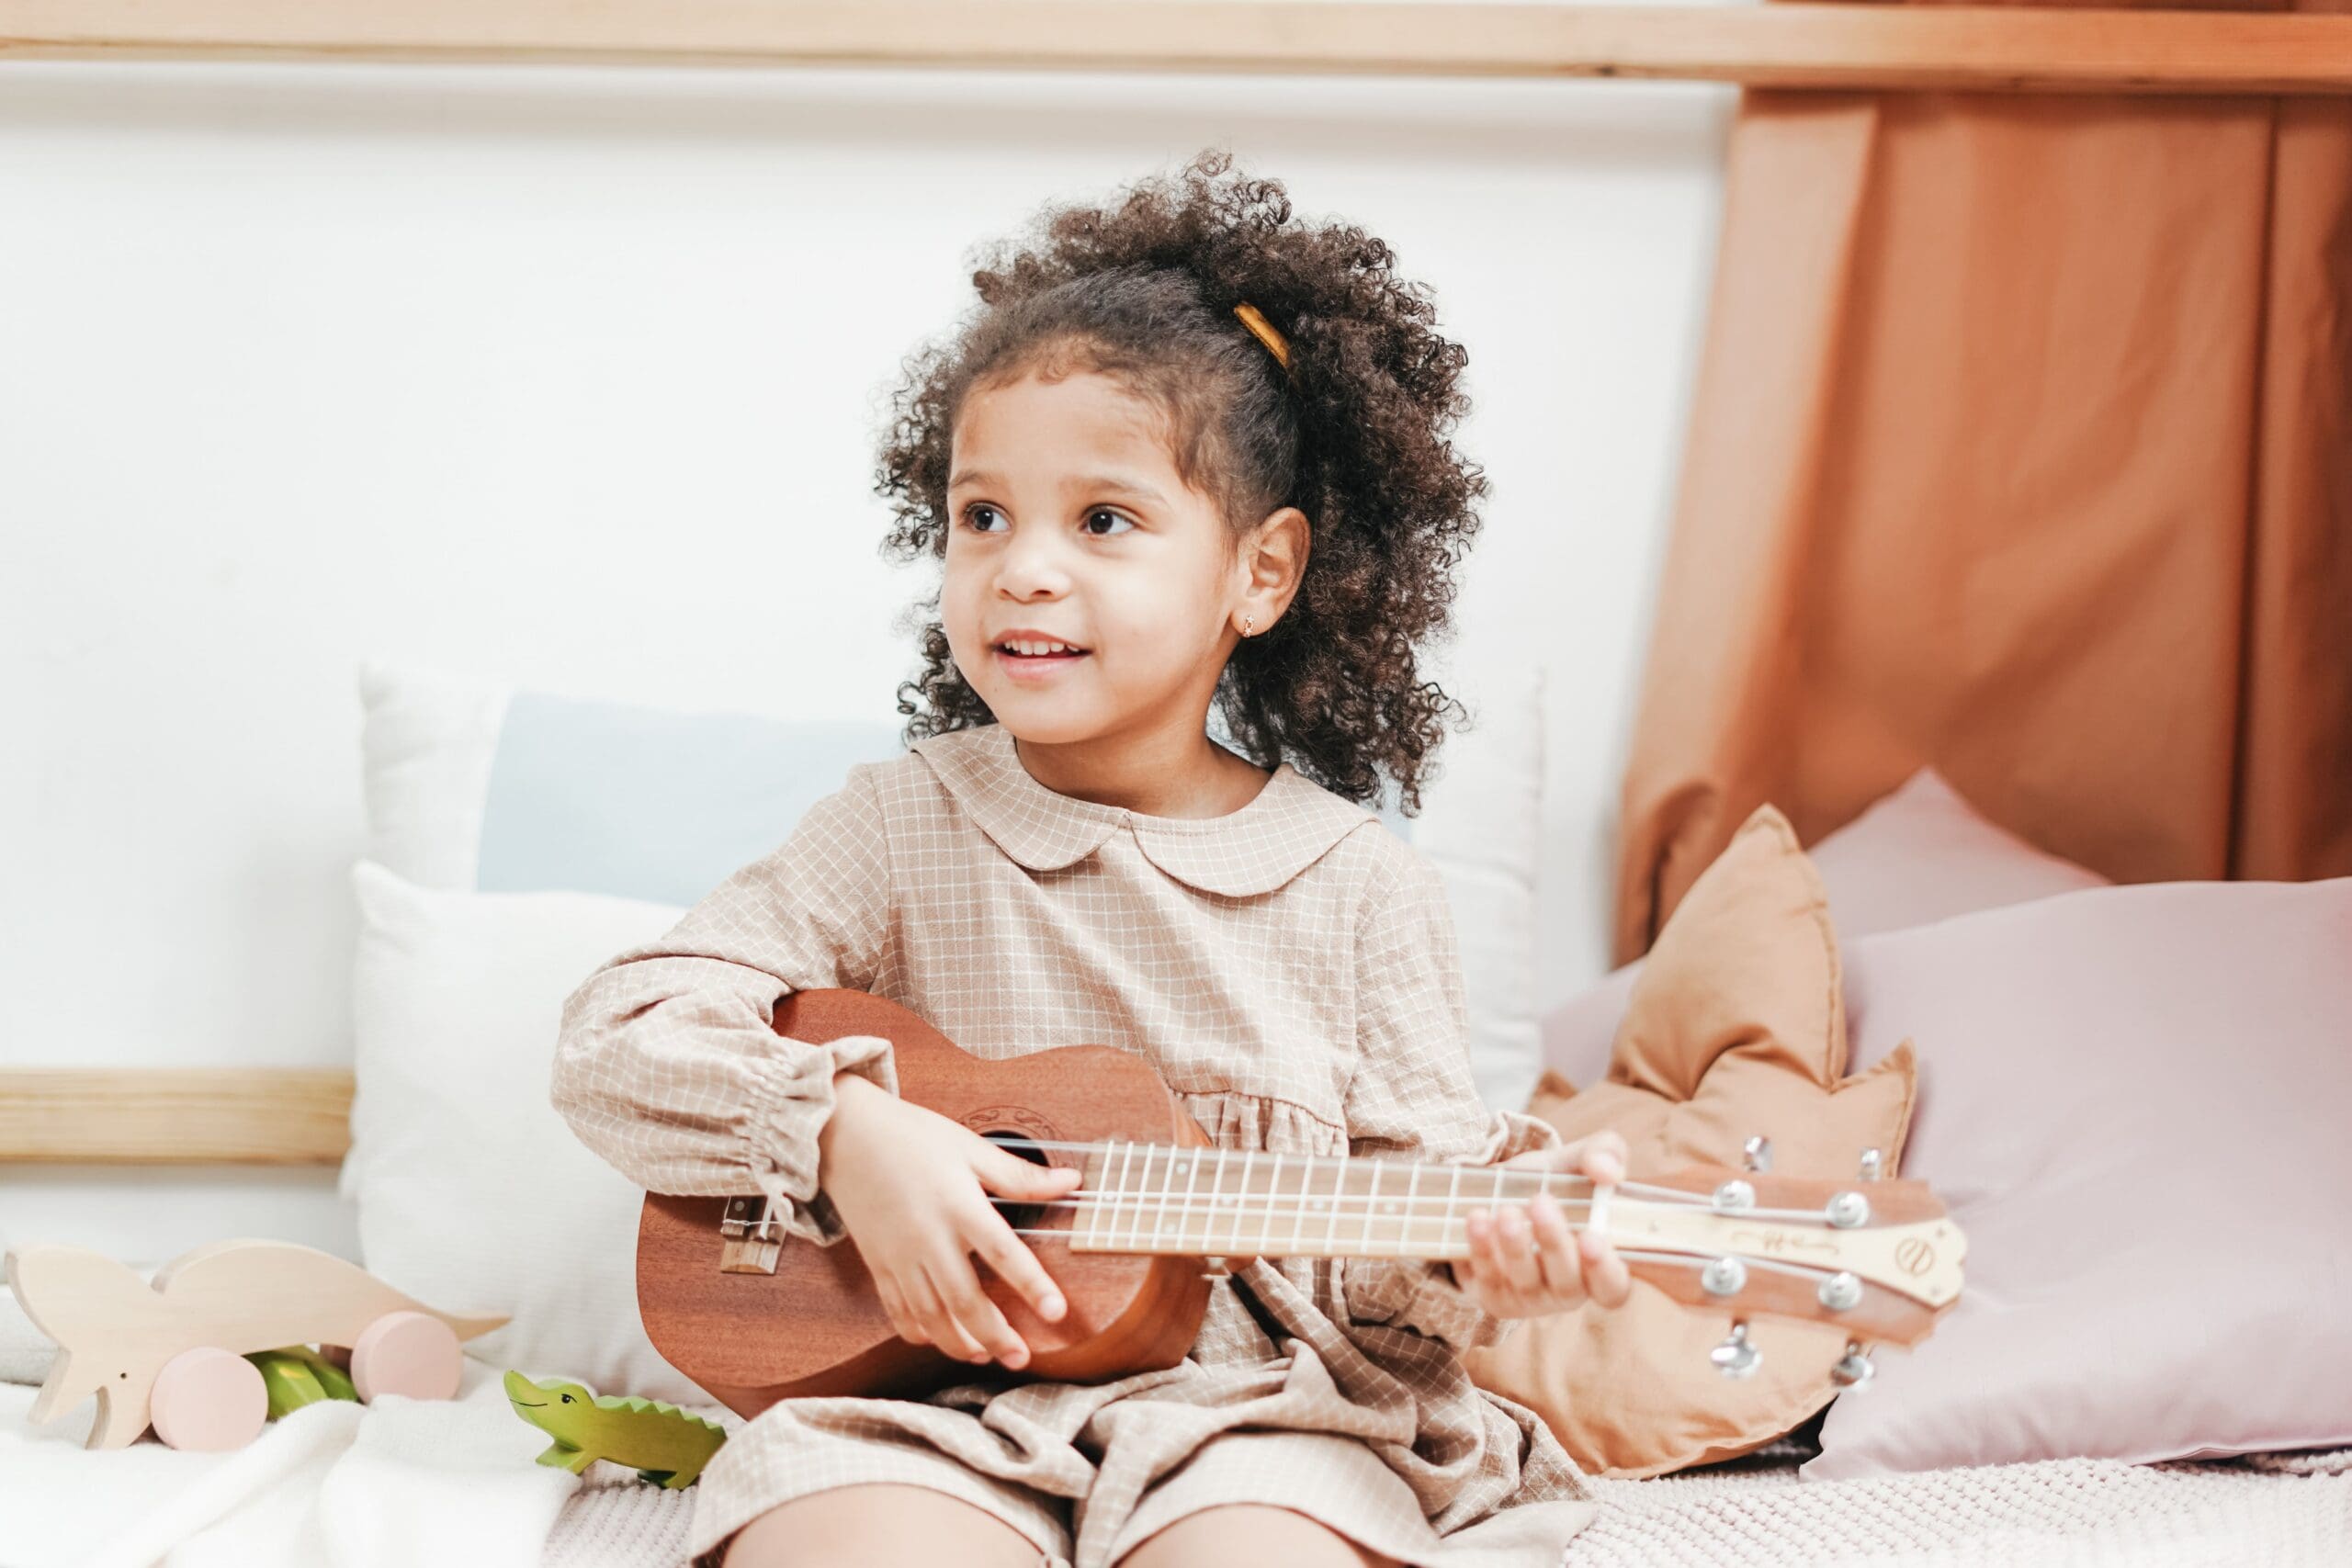 Effects of Music on Child Development